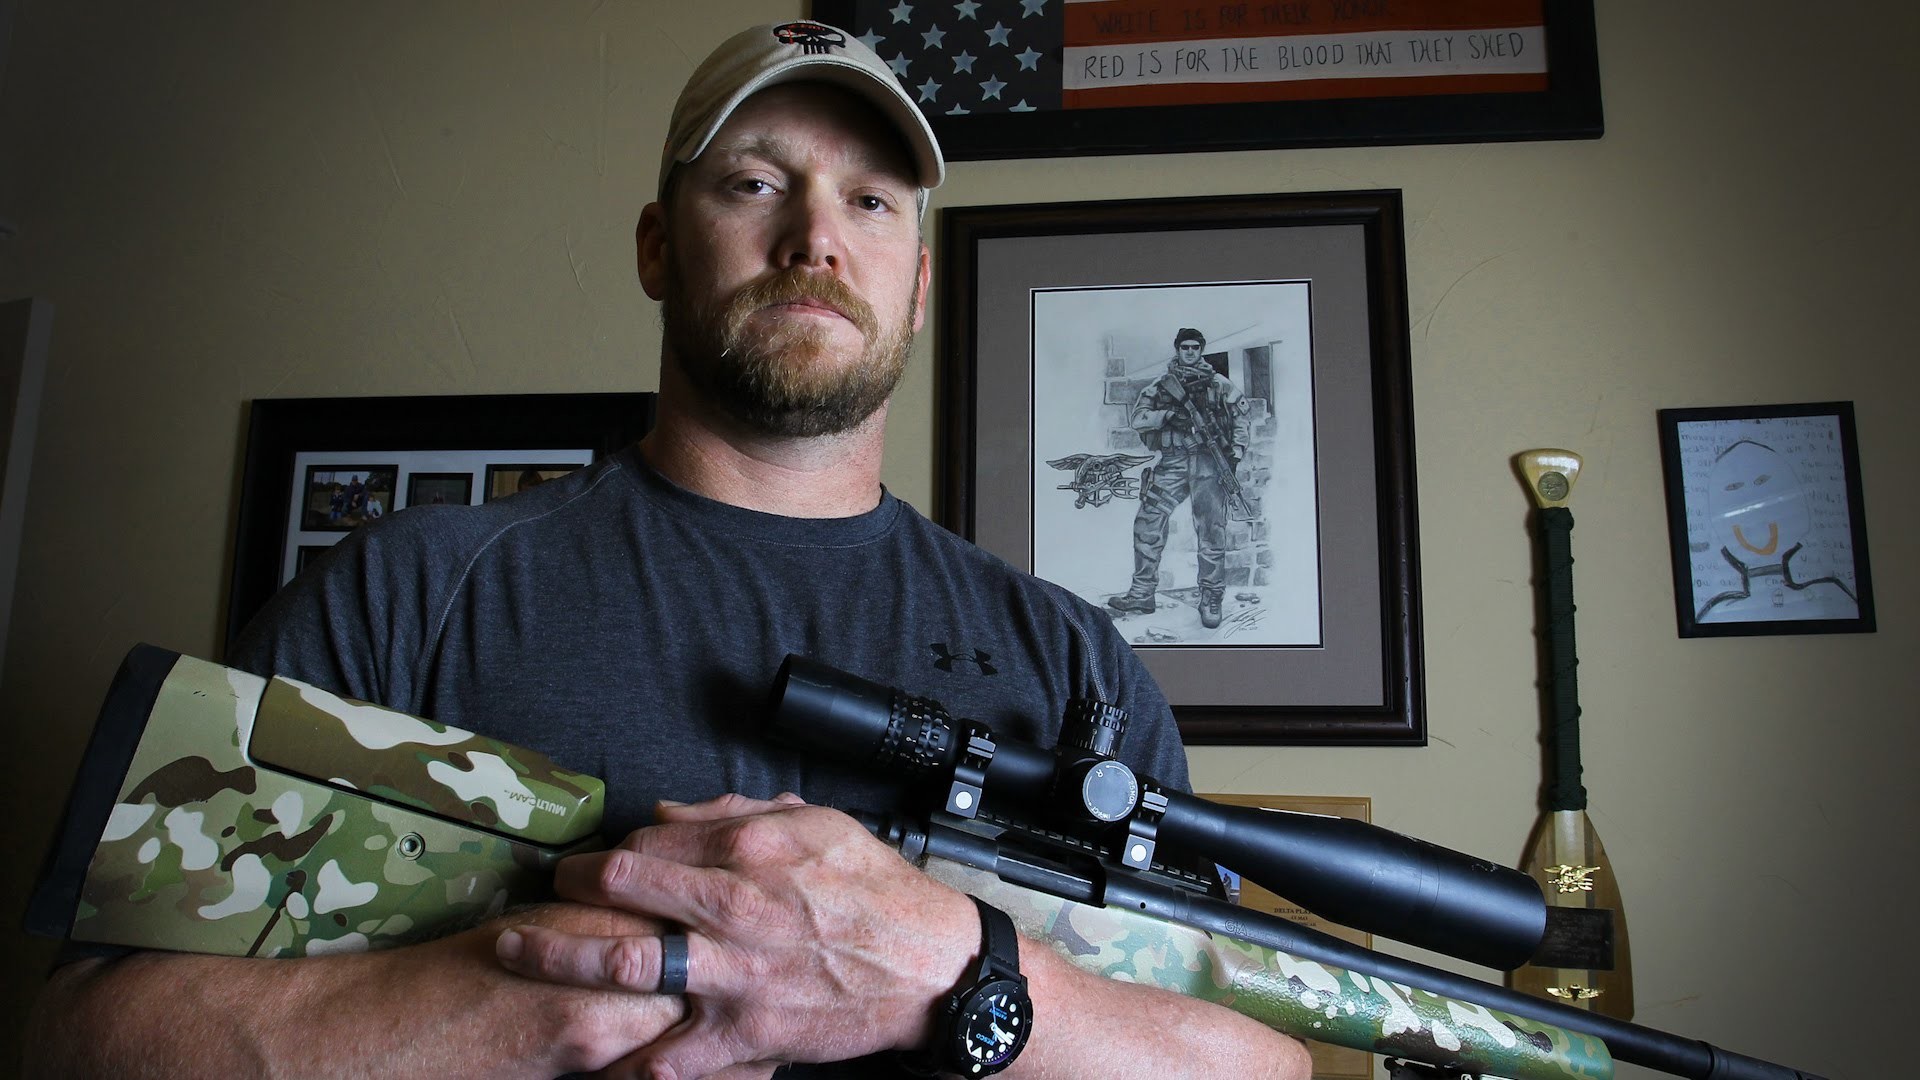 1920x1080 Jesse Ventura interview: “American Sniper” hero is a backstabbing liar